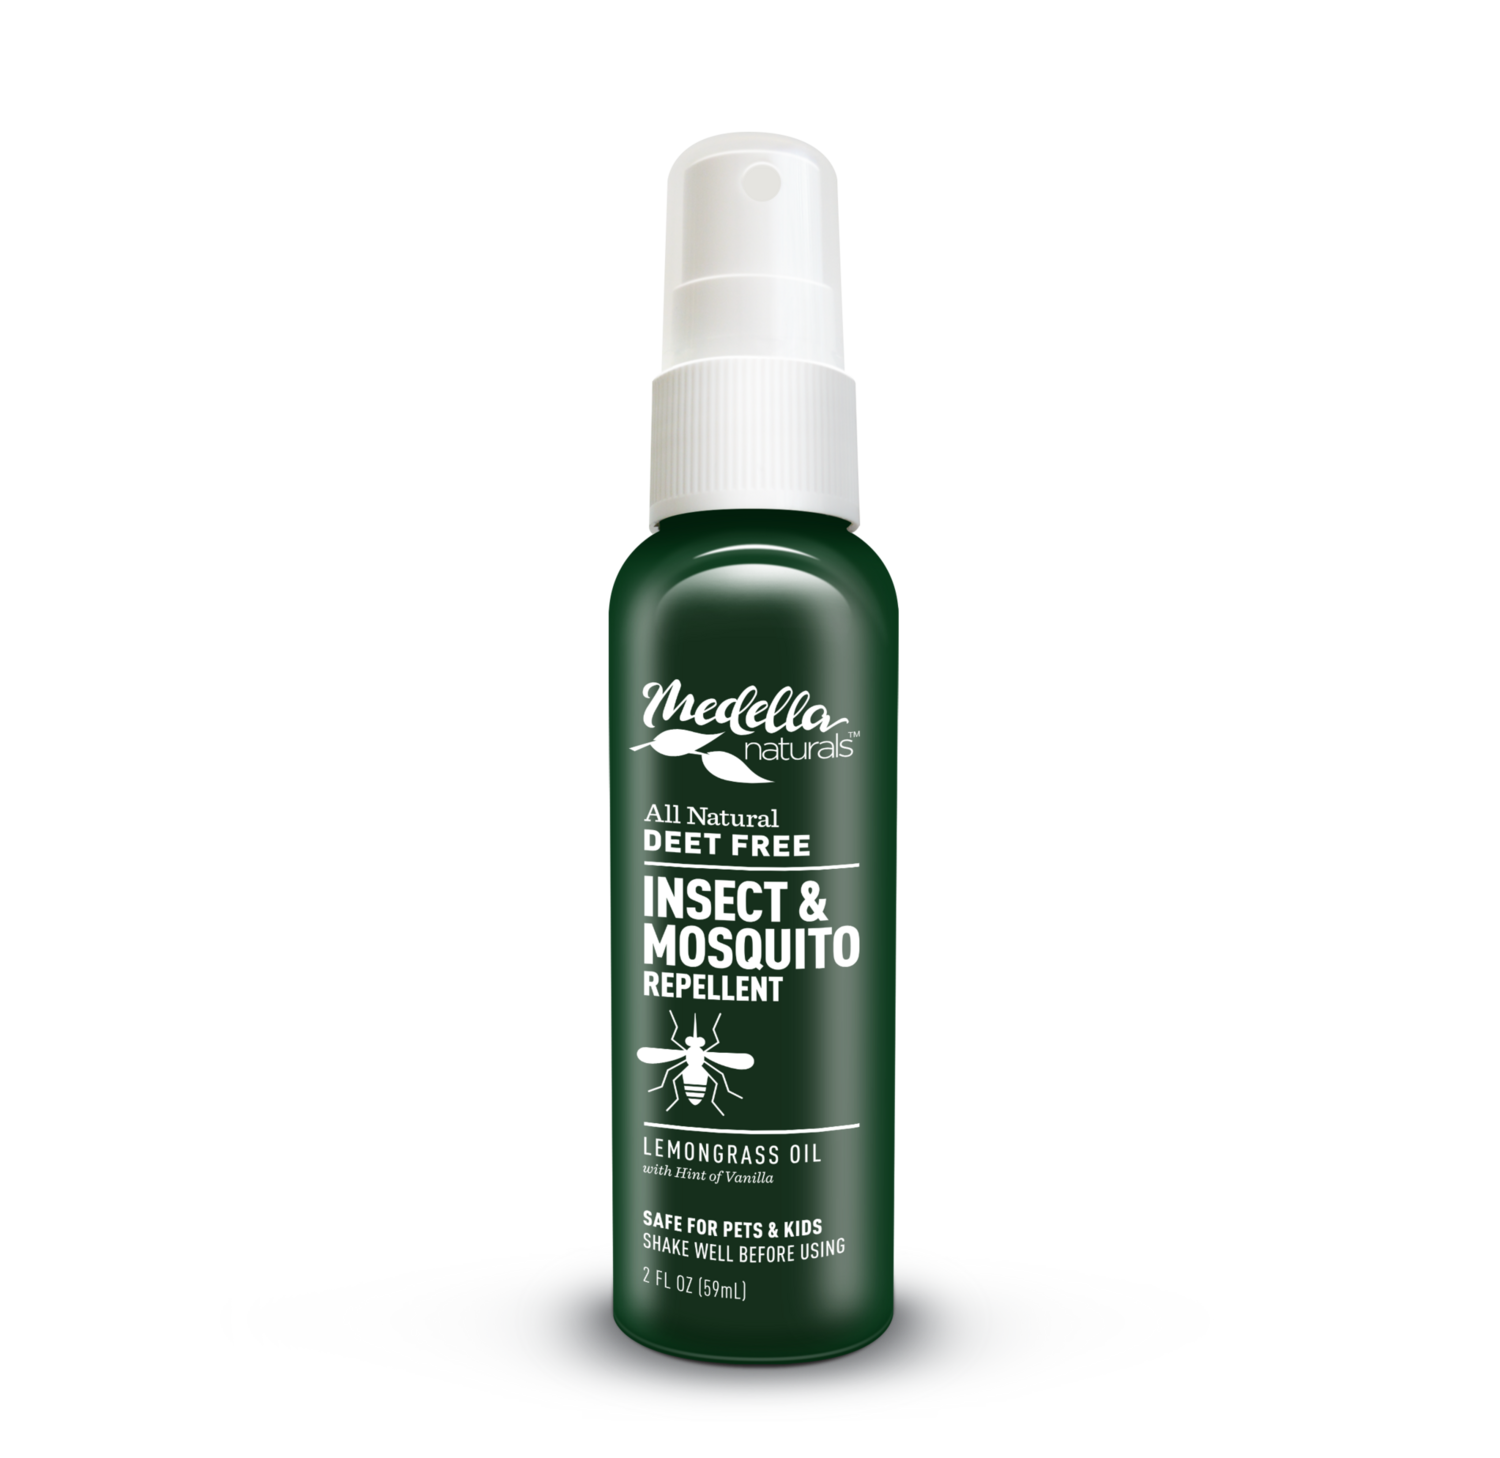 Medella Naturals All Natural, DEET Free Insect & Mosquito Repellent (2oz.)